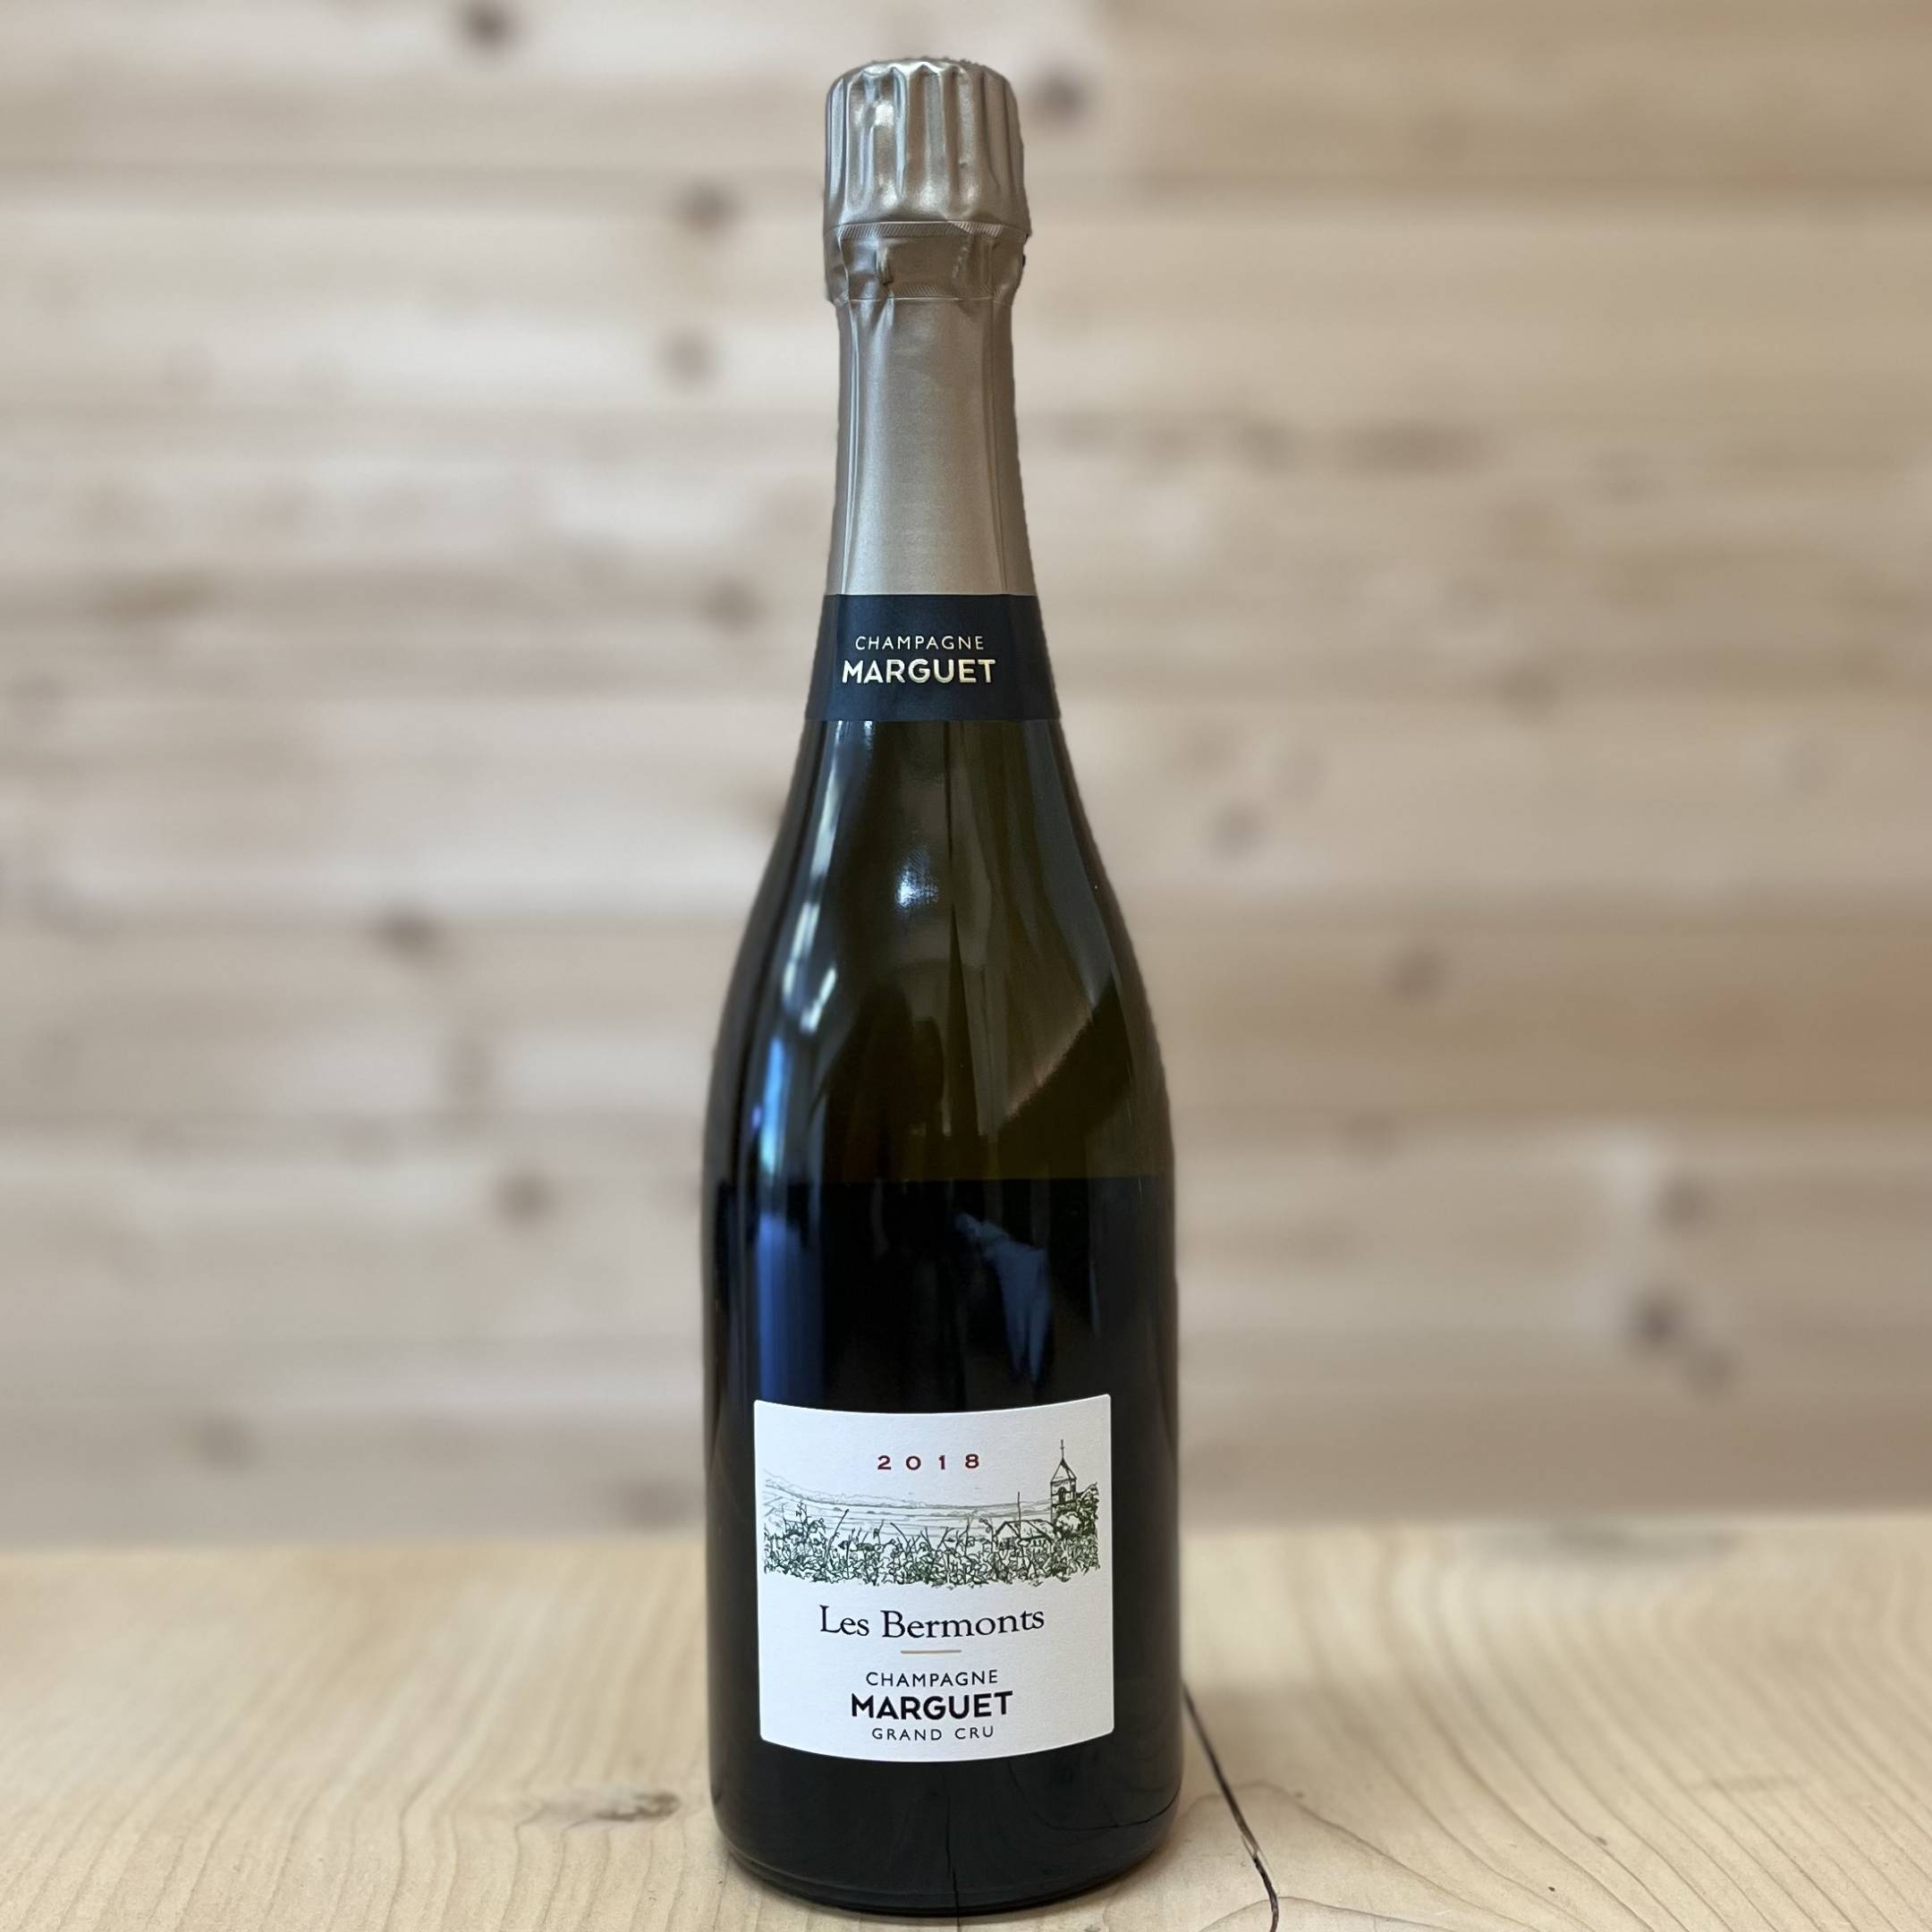 Marguet Champagne Brut Nature Lieu-dit Les Bermonts Grand Cru 2018